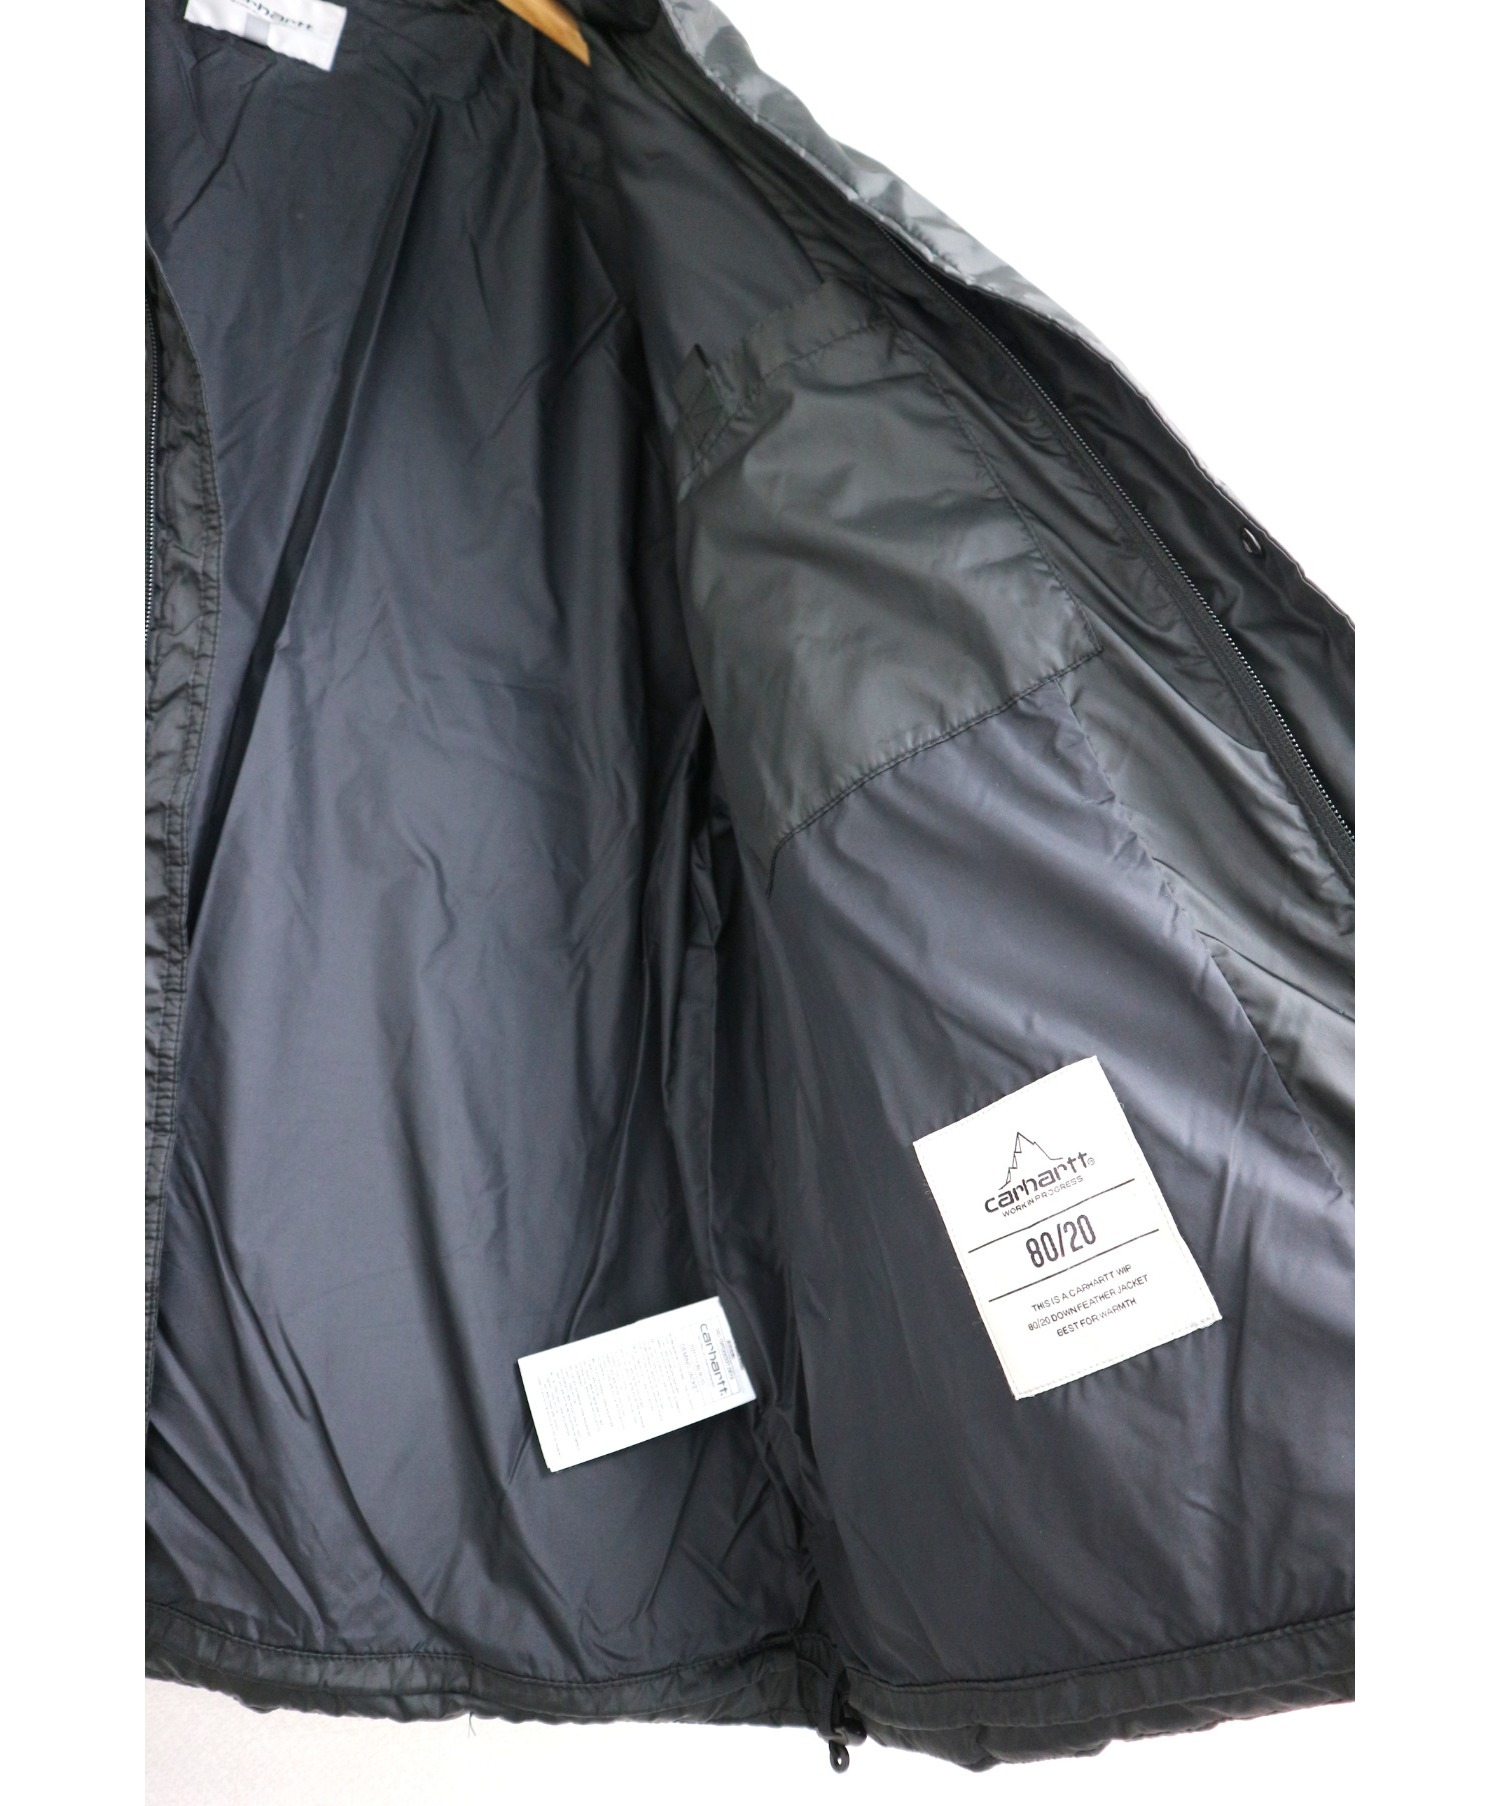 Carhartt WIP (カーハート) ダウンジャケット ブラック サイズ:L DEMING JACKET